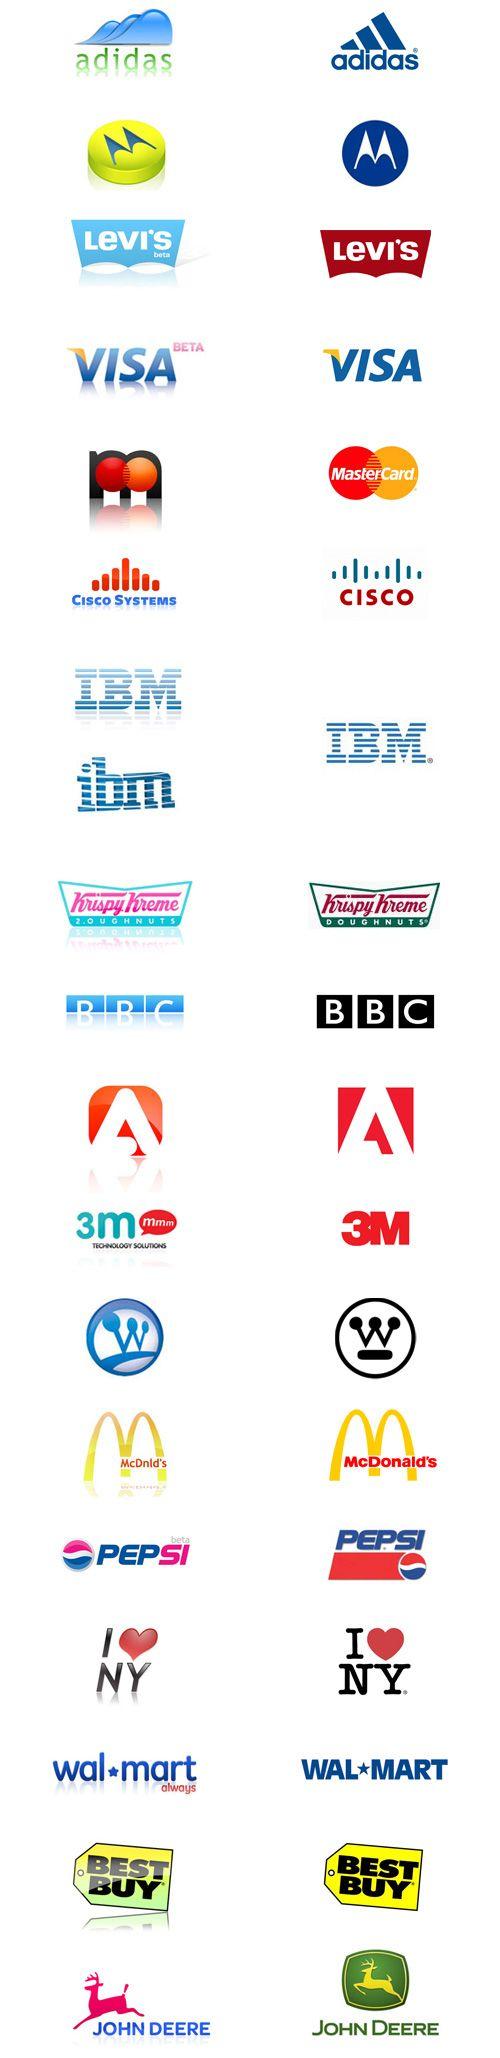 Web 2.0 Logo - 50 web 2.0 logos compared | Logo design • Branding • Graphic design